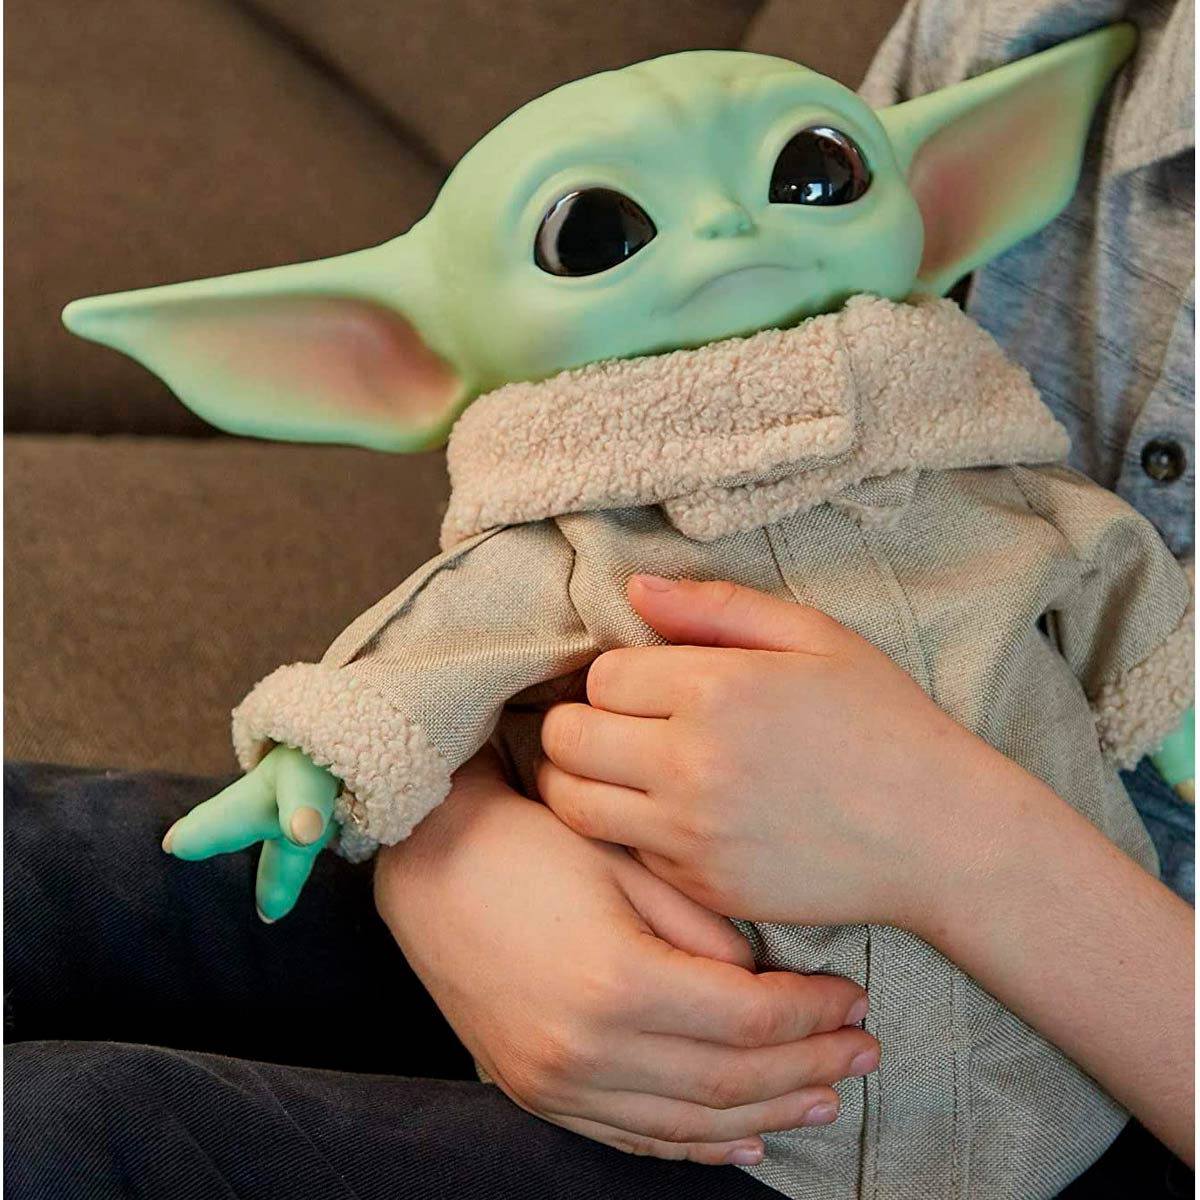 Star Wars Mandalorian Peluche Baby Yoda 28 cm